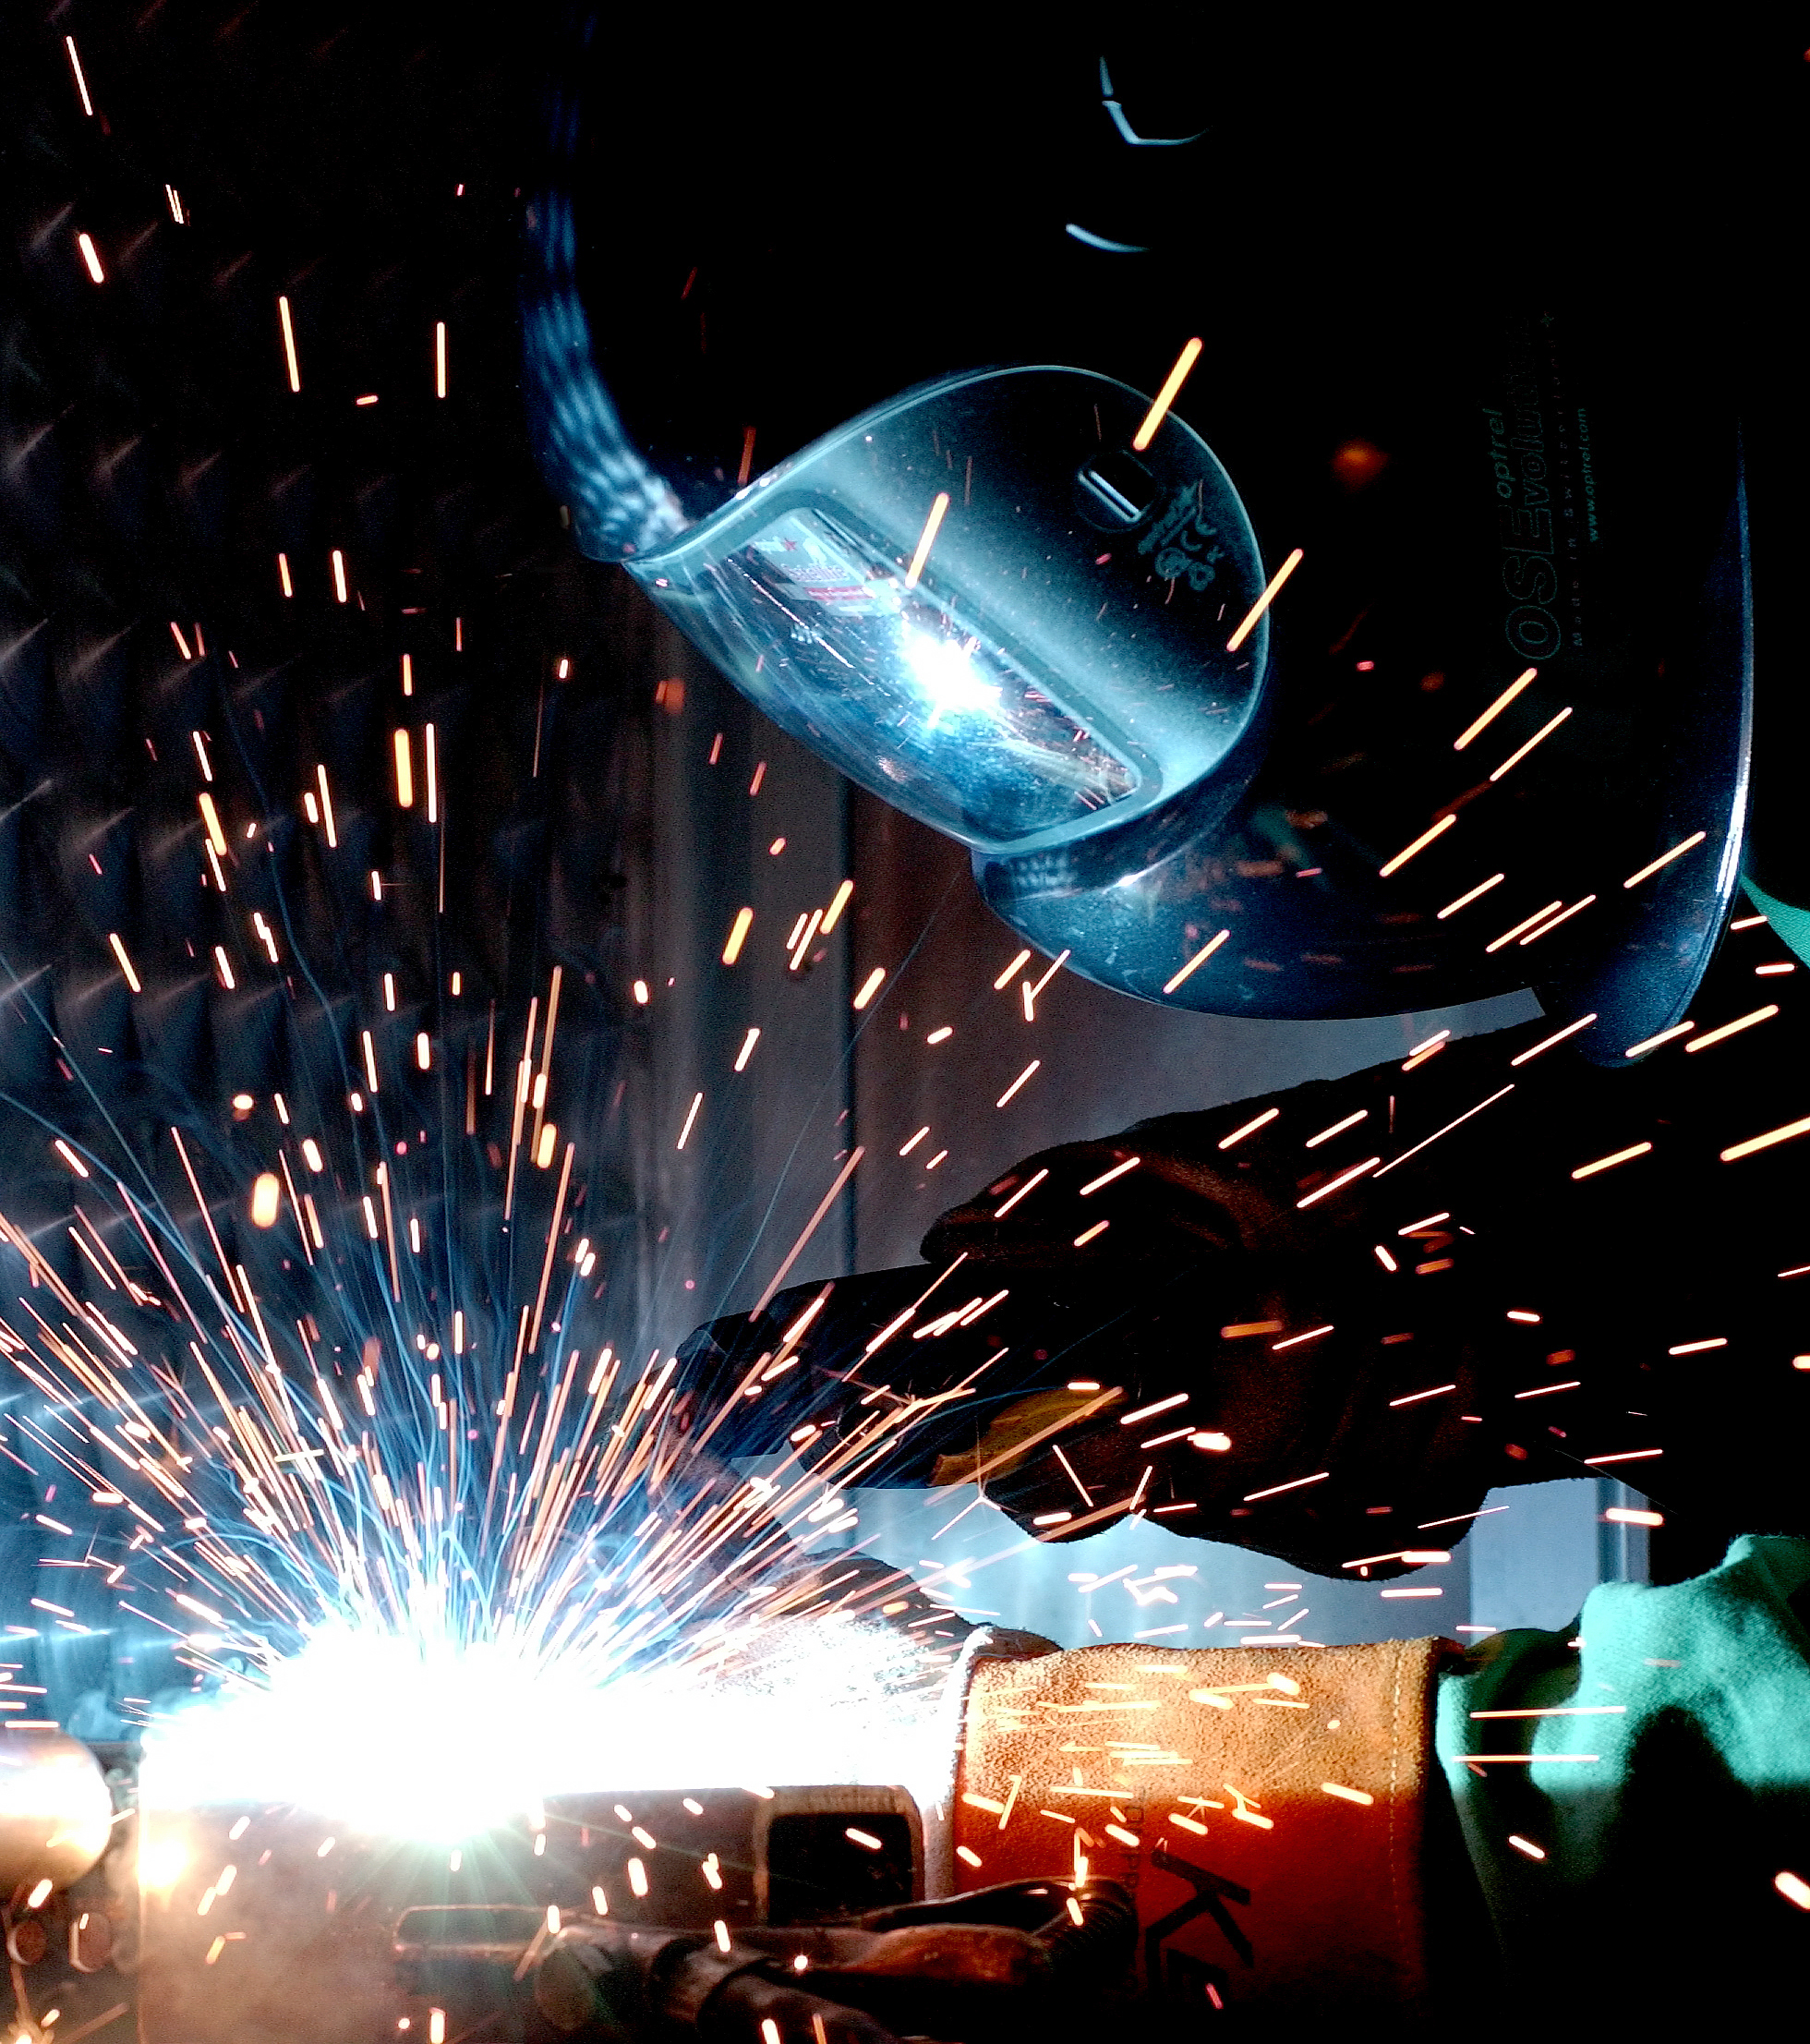 All professional welders use welding headger, coz for